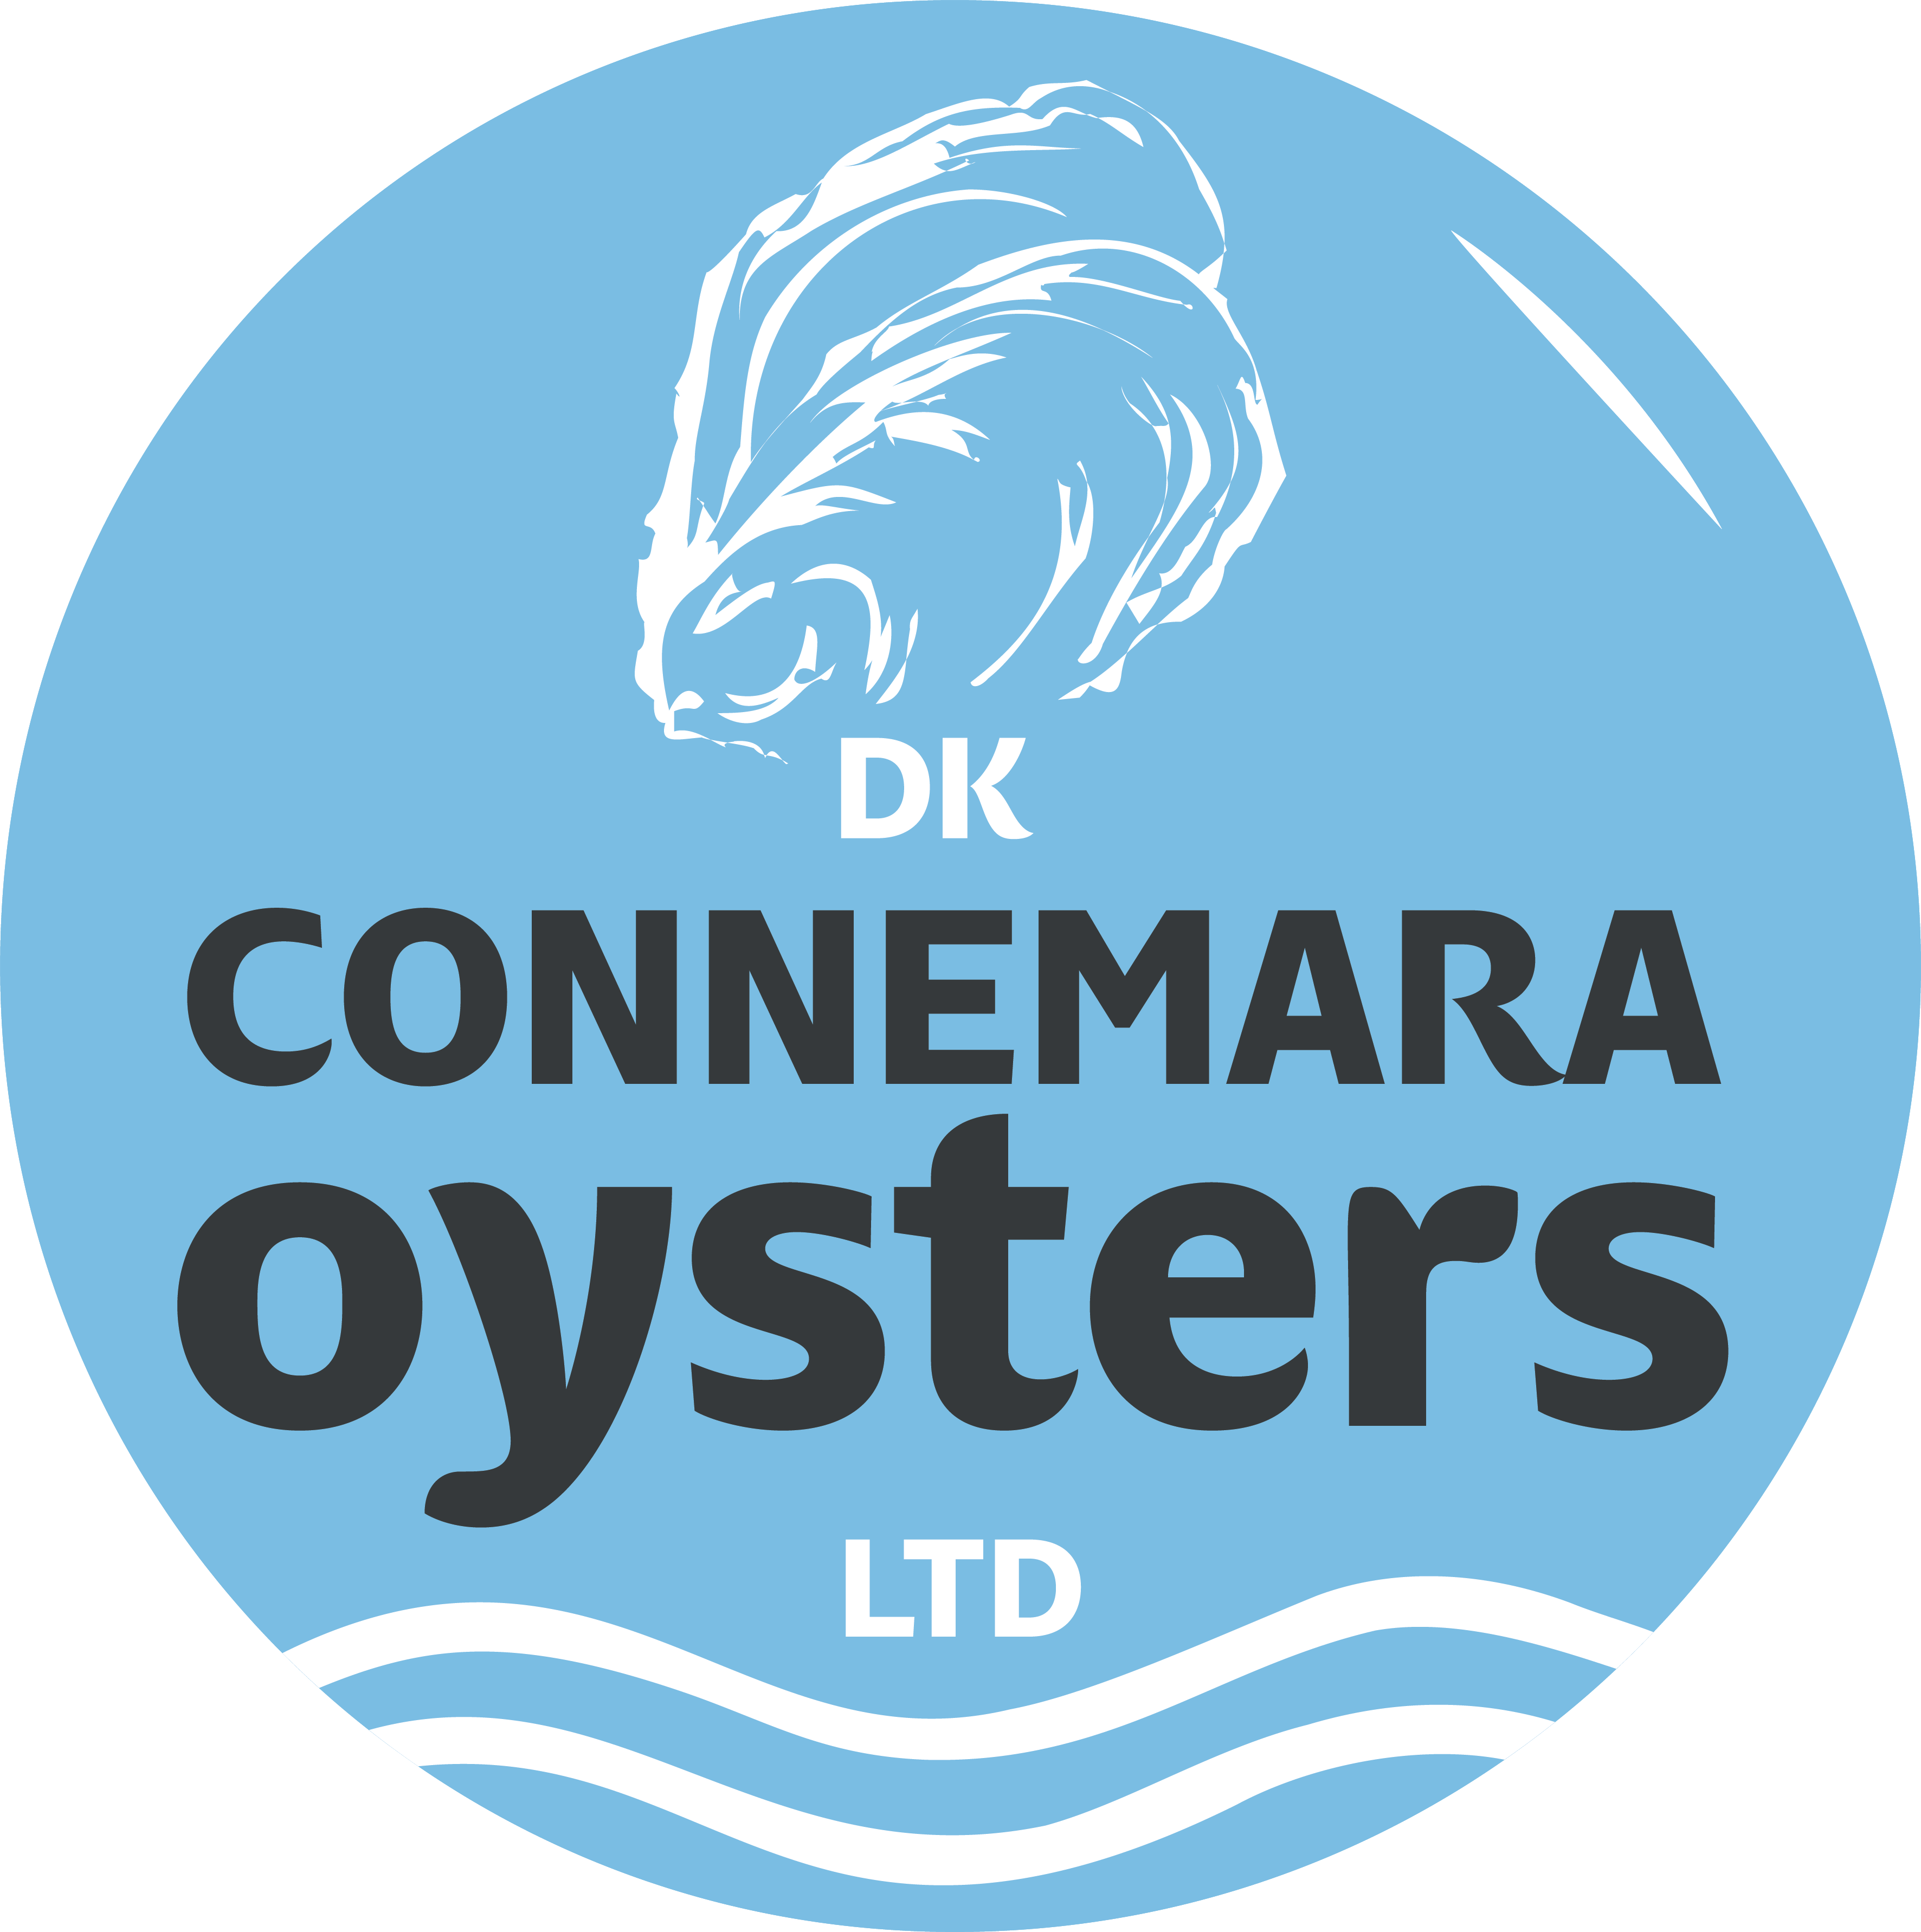 DK Connemara Oysters